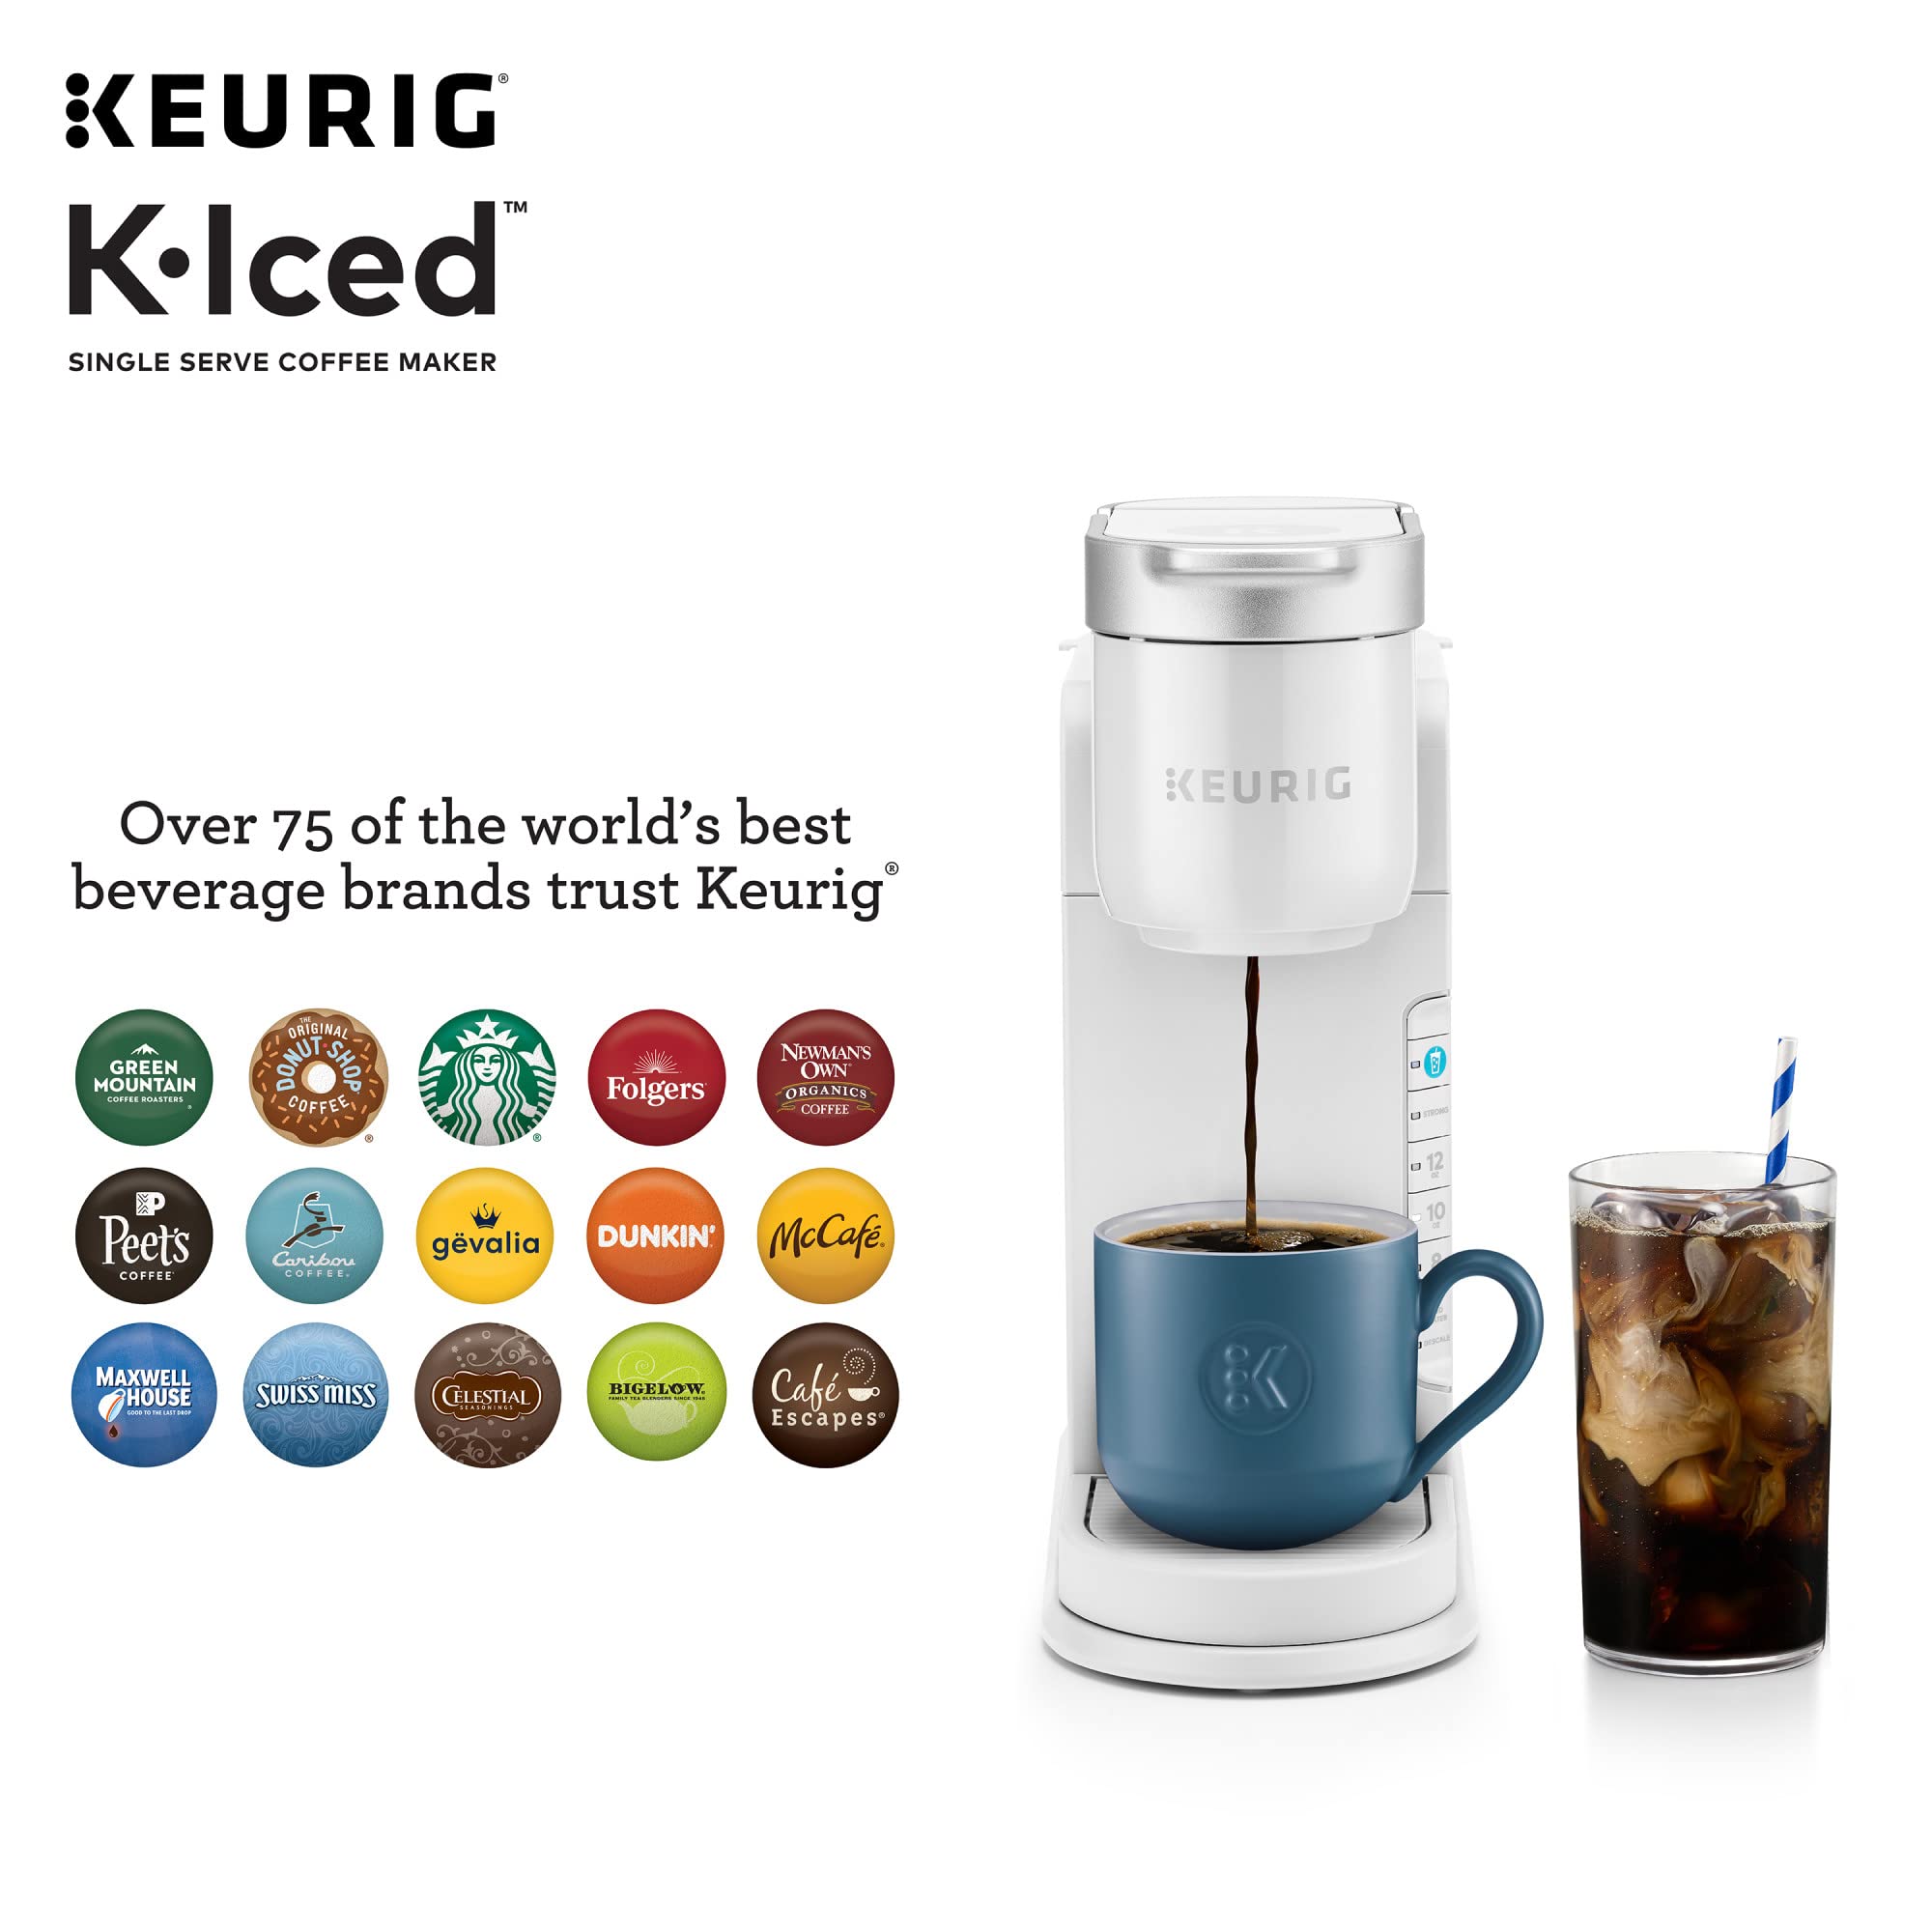 Keurig K-Iced Single Serve Coffee Maker, White